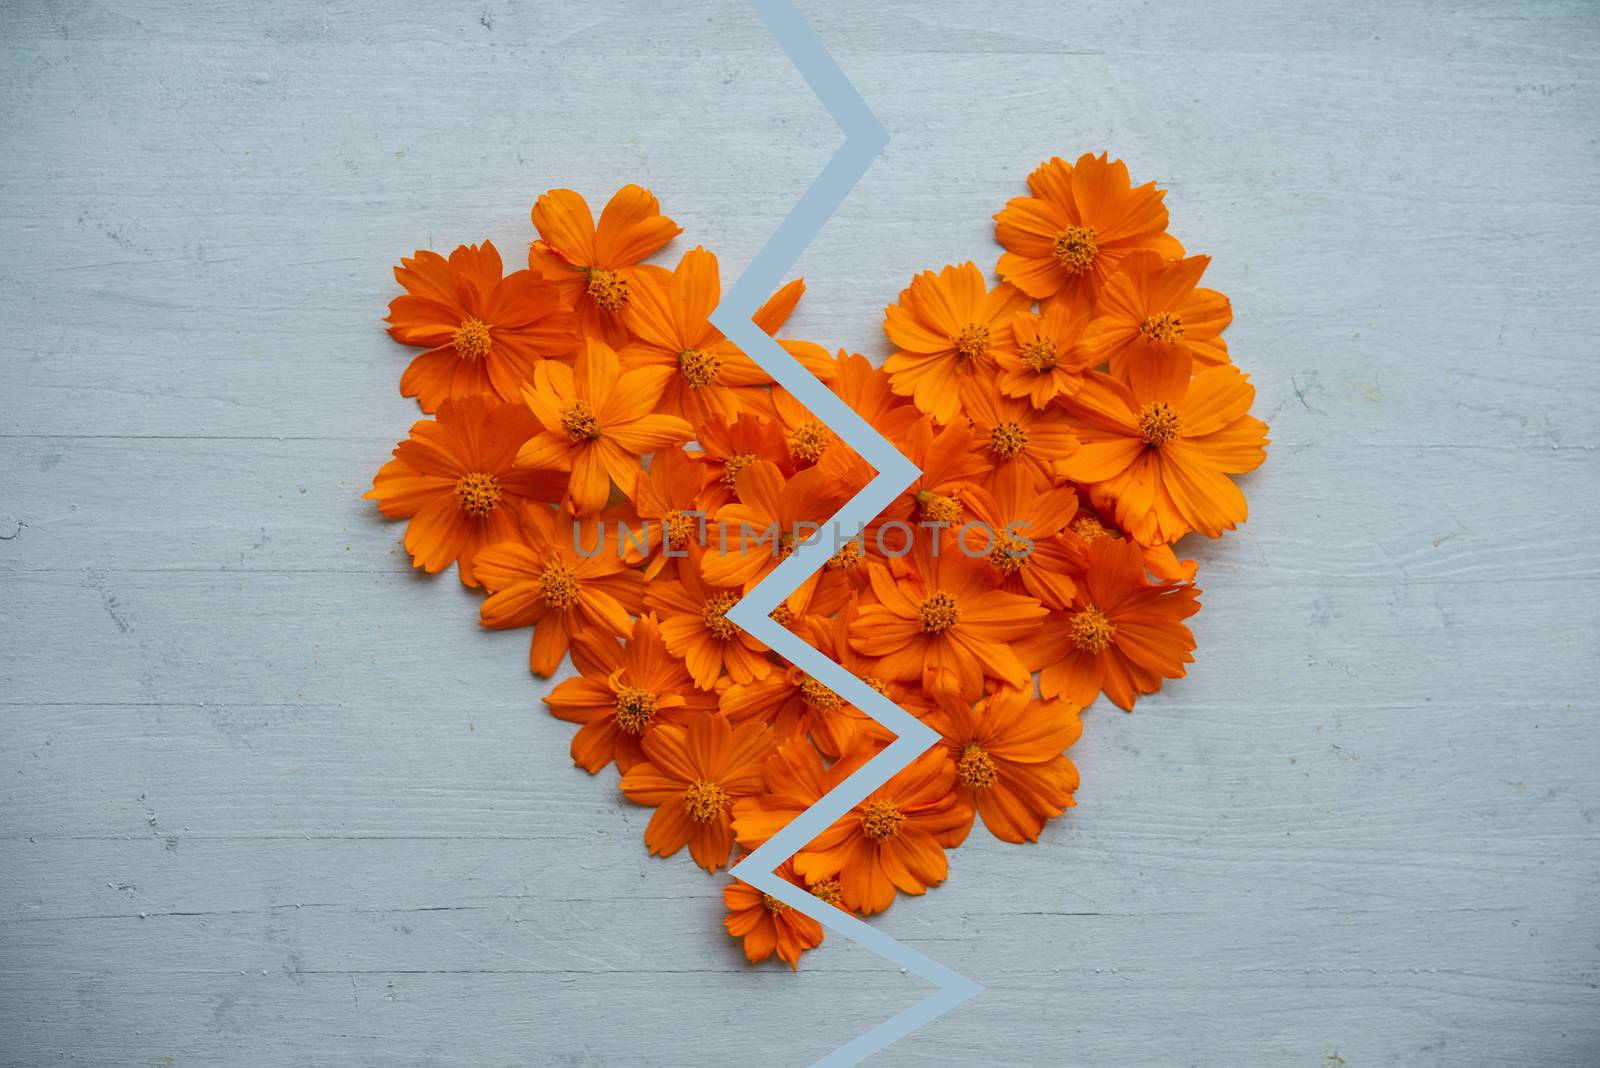 Broken heart made of orange cosmos  by szefei